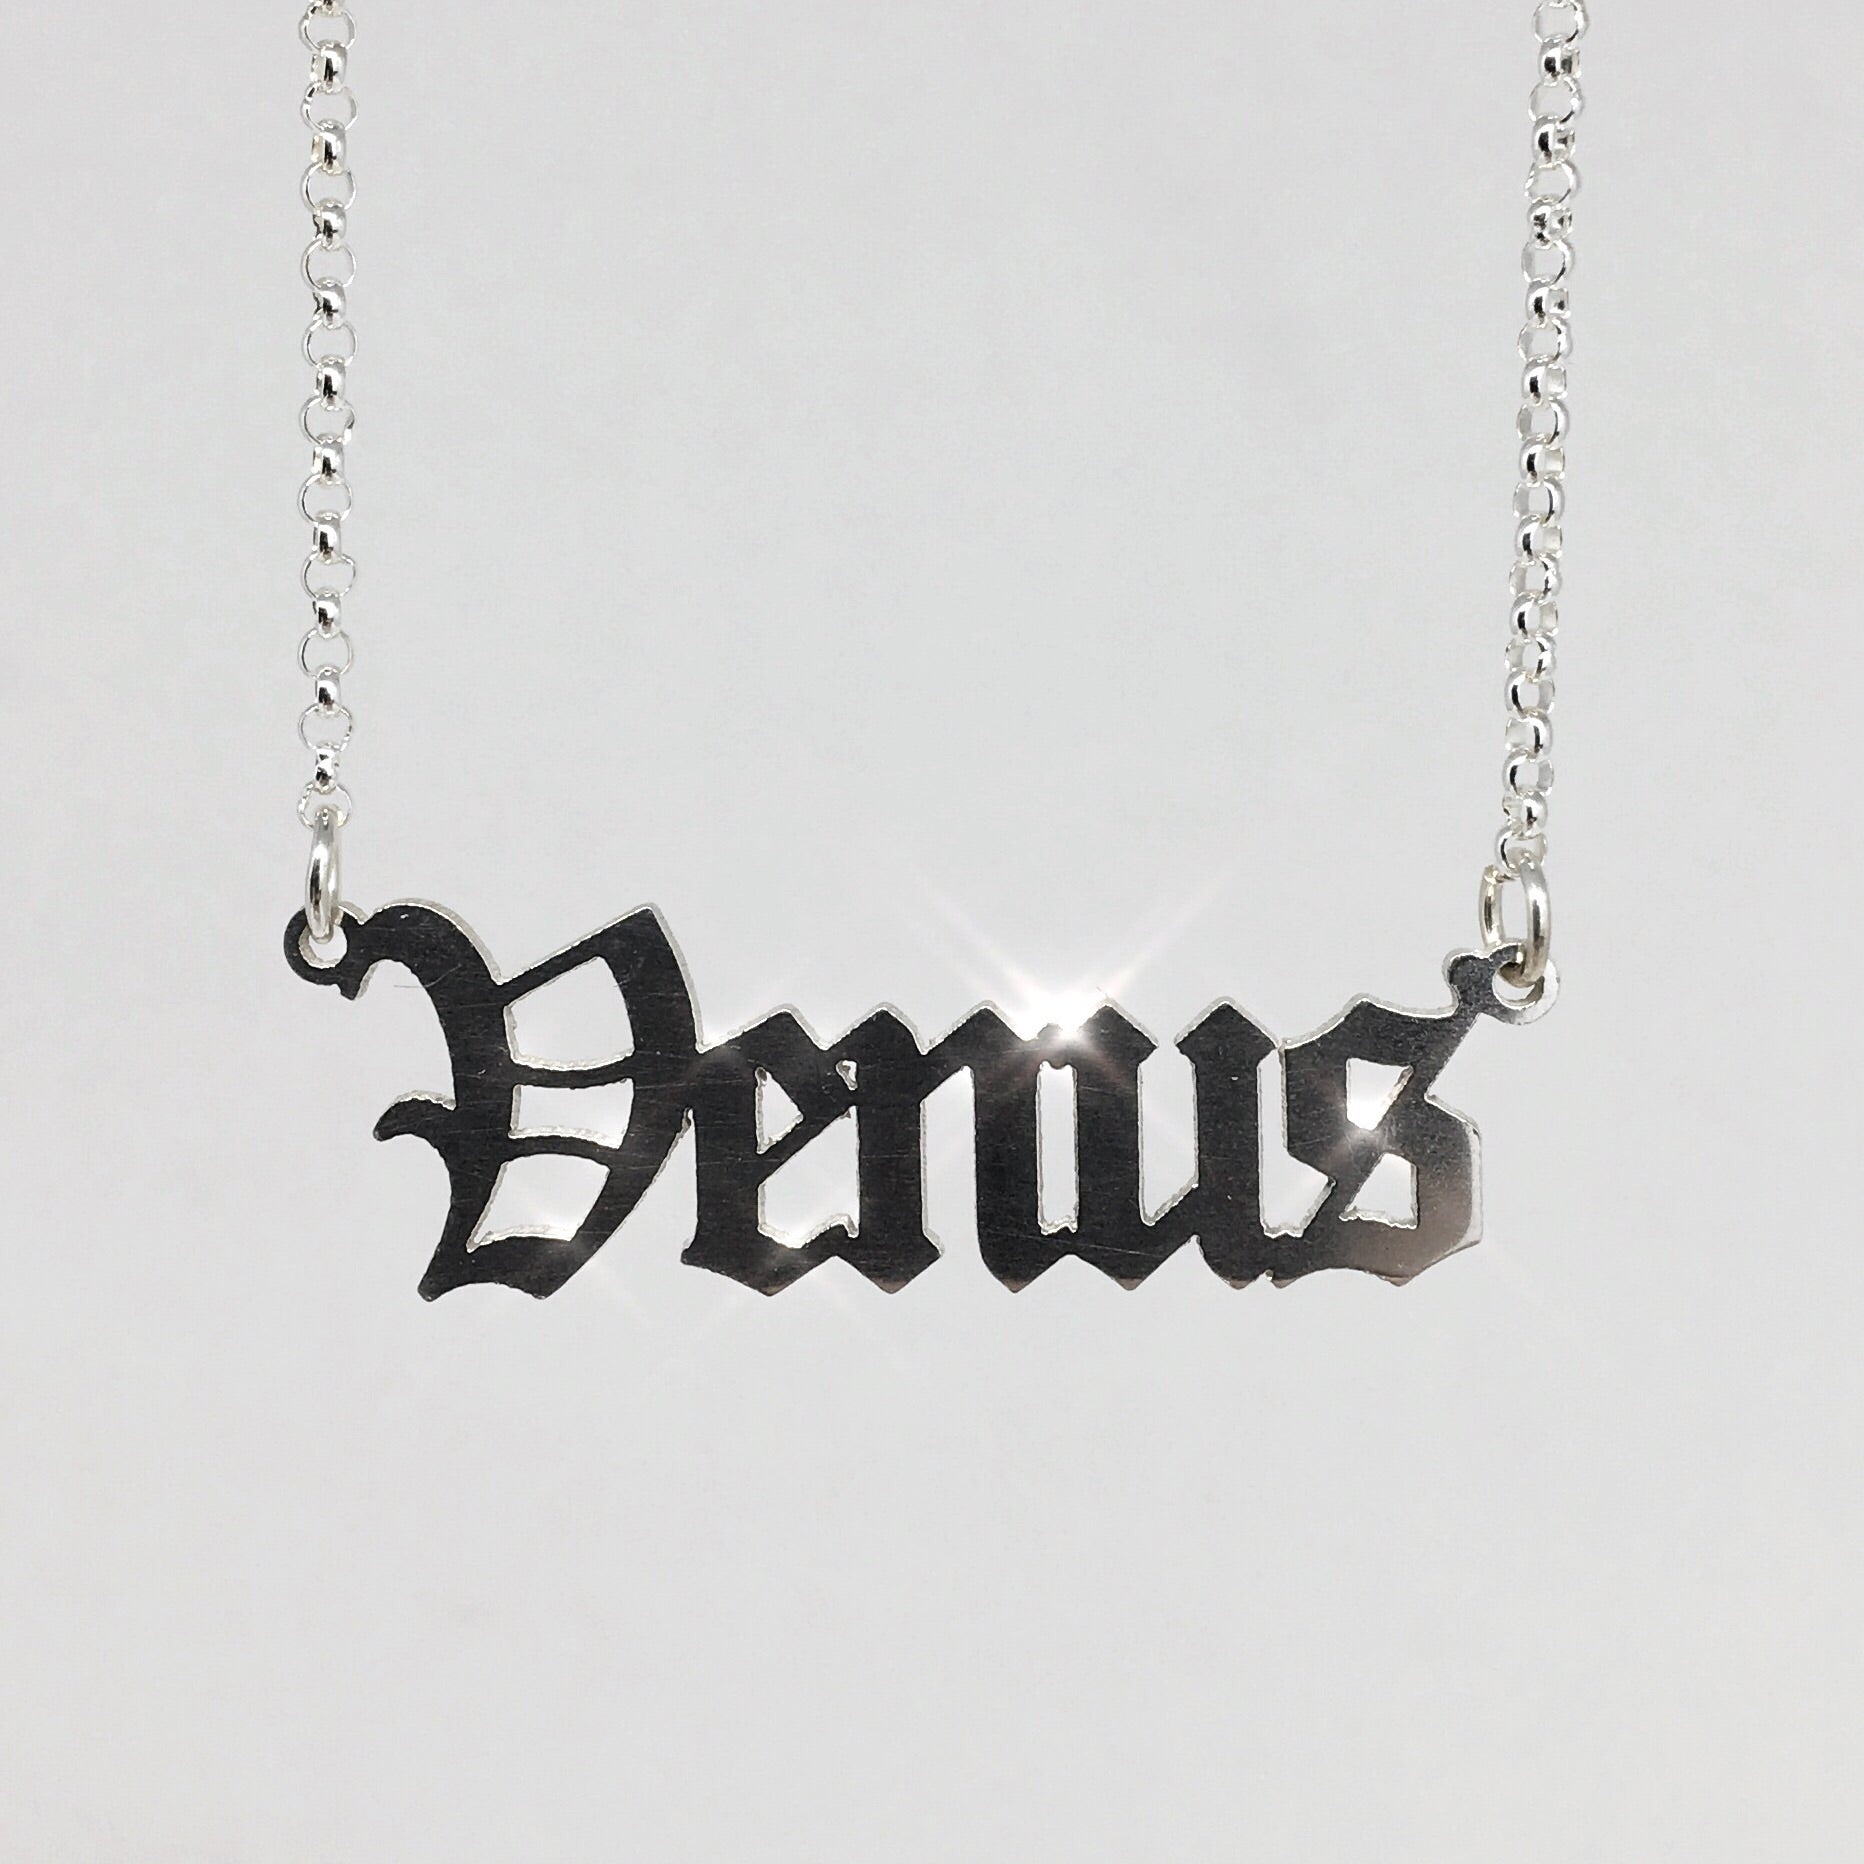 sterling silver Venus nameplate necklace in gothic blackletter font.